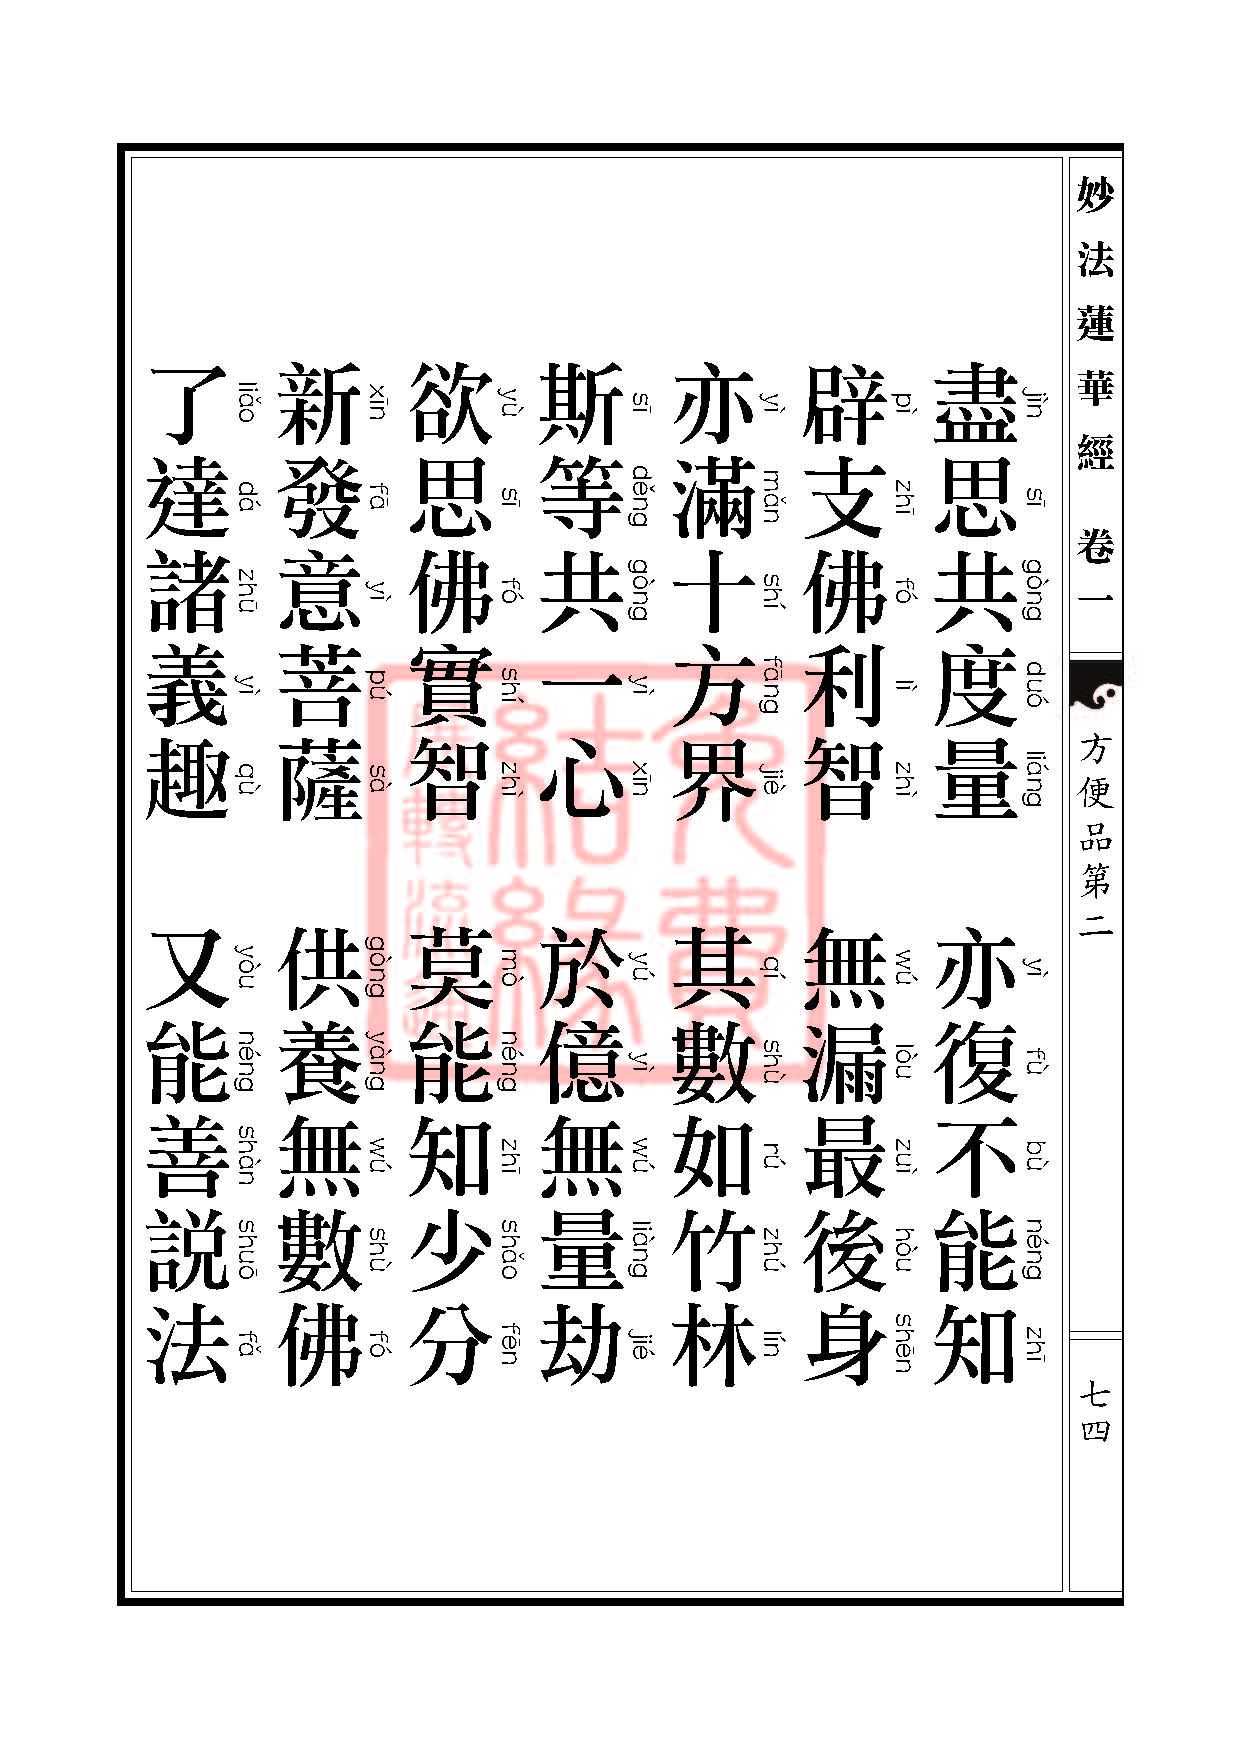 Book_FHJ_HK-A6-PY_Web_页面_074.jpg